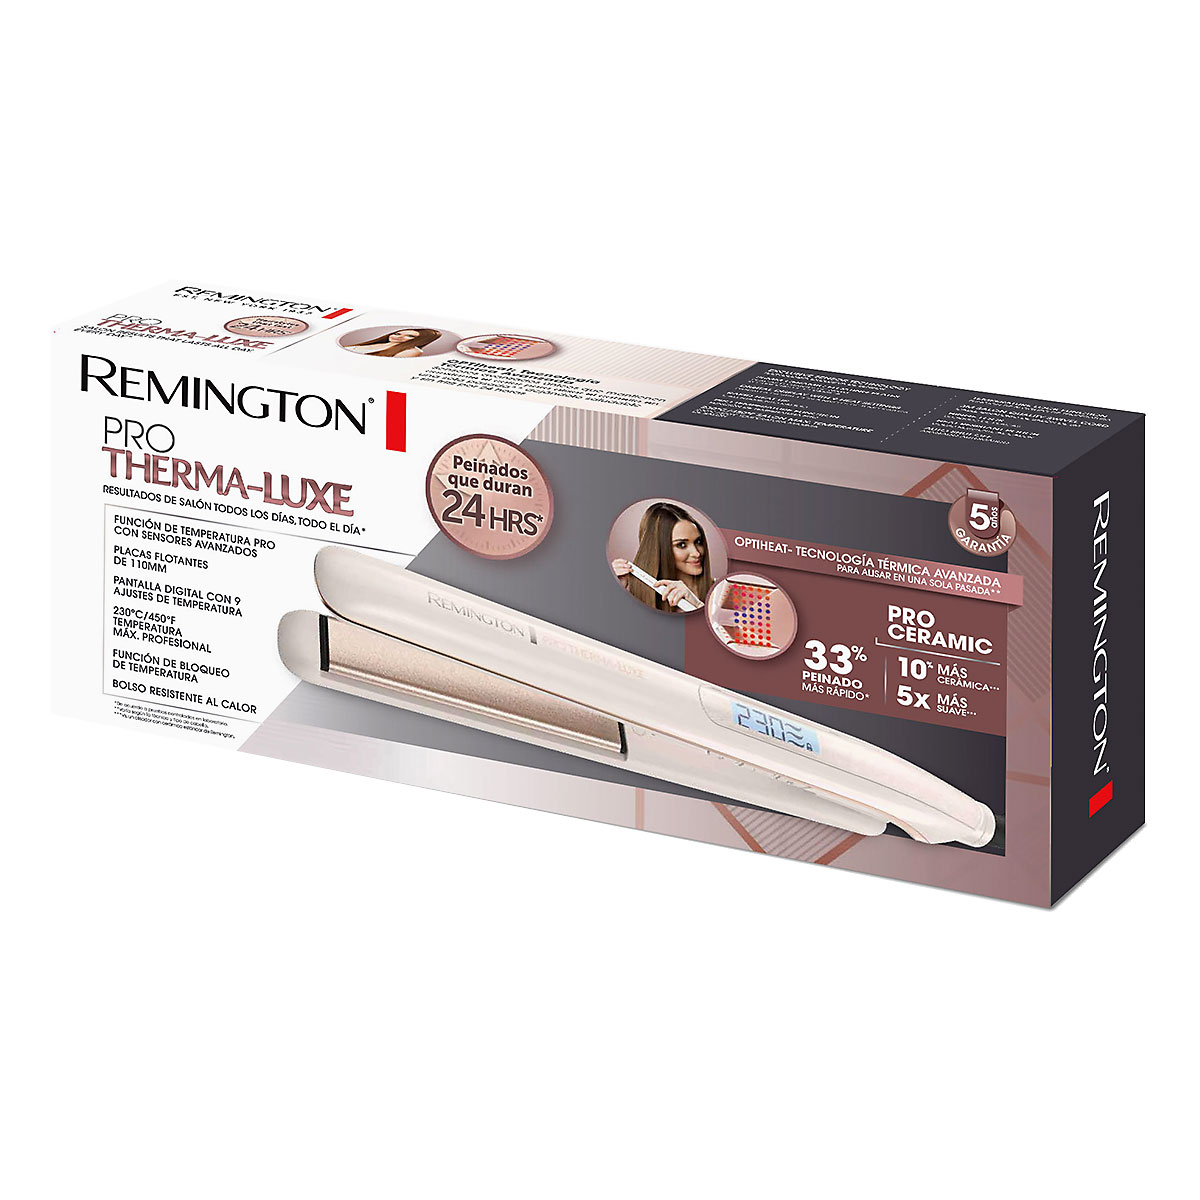 Plancha de pelo Remington S9100 PROluxe - Bulgaria, Nuevo - Plataforma  mayorista